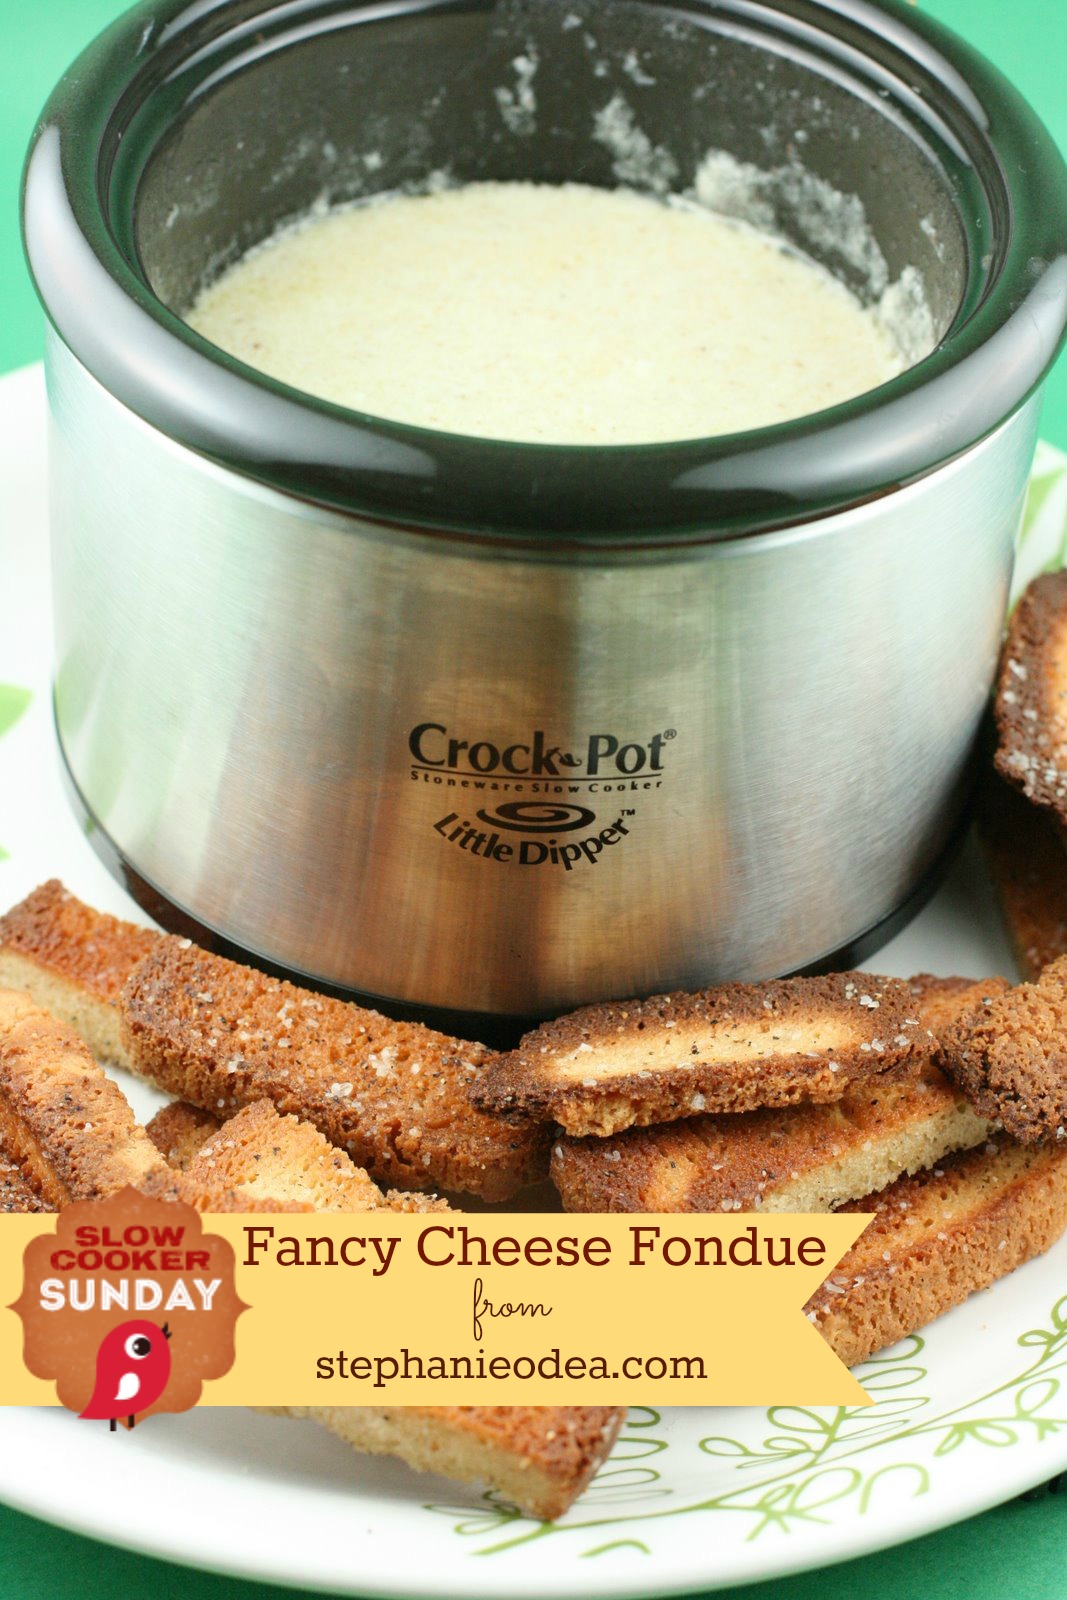 https://todayscreativelife.com/wp-content/uploads/2013/02/crockpot-fondue-recipe.jpg